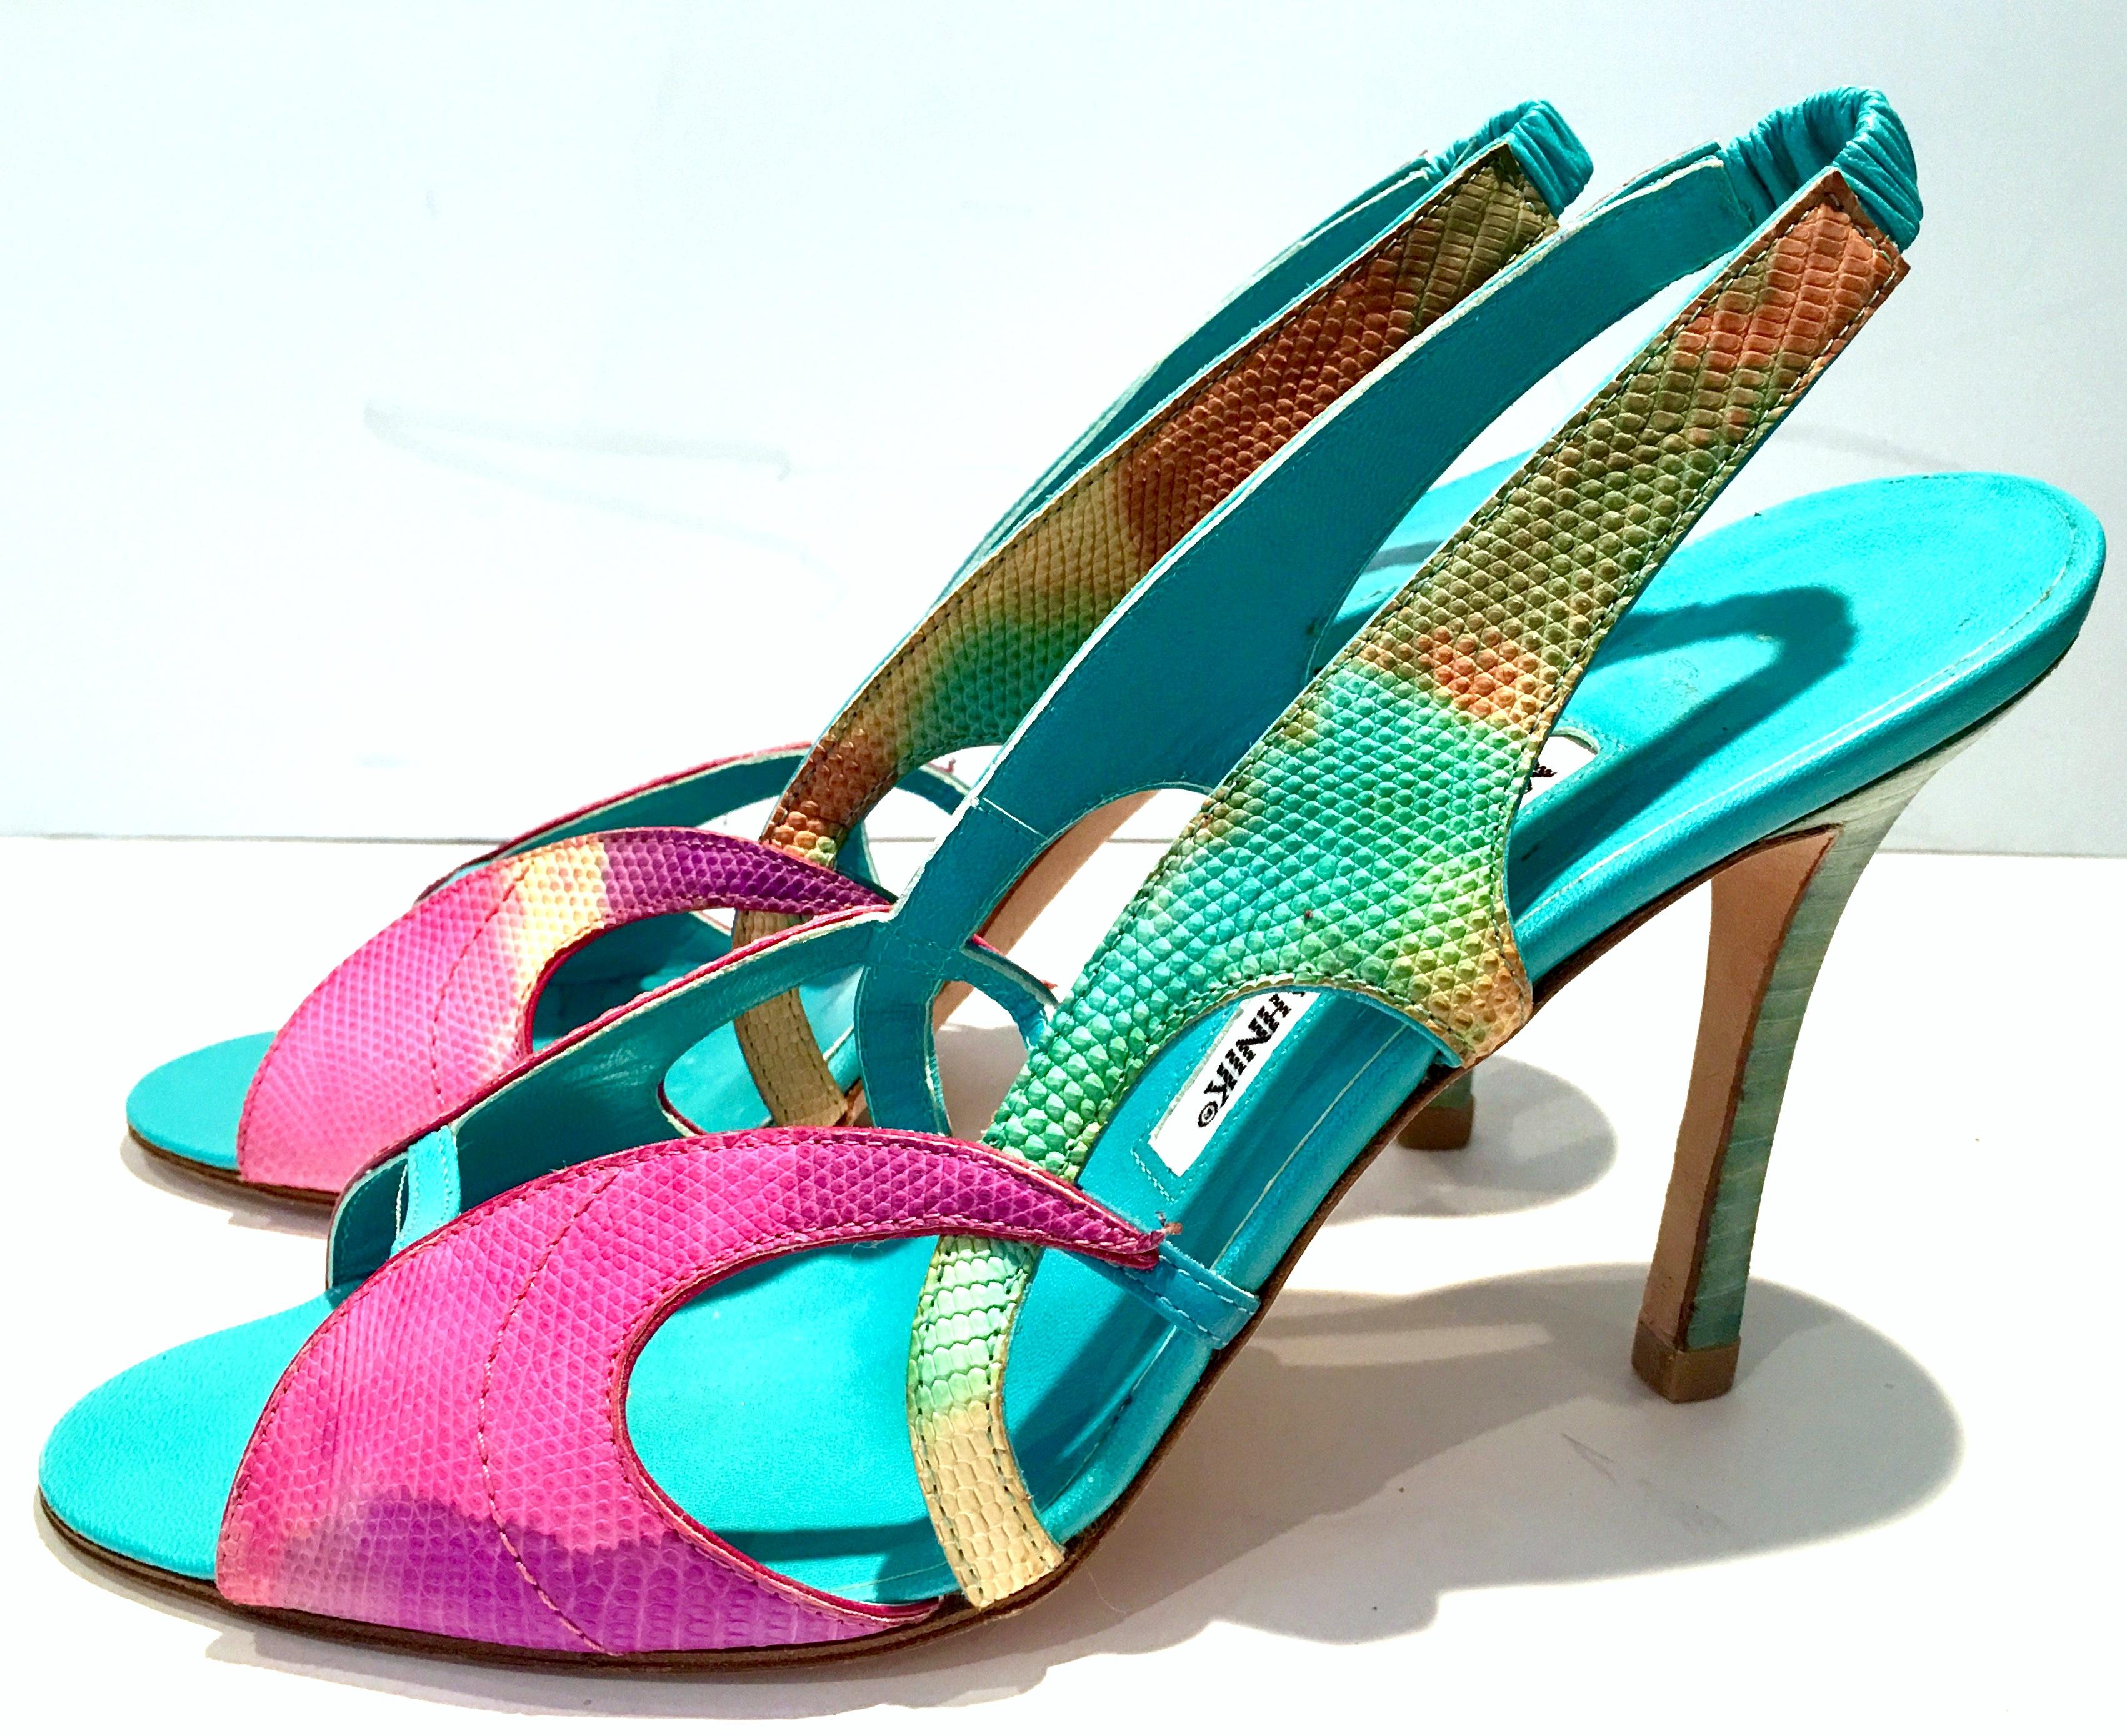 Beige 2013 New Pair Of Manolo Blahnik Multi-Color Python Sling Back Sandals For Sale